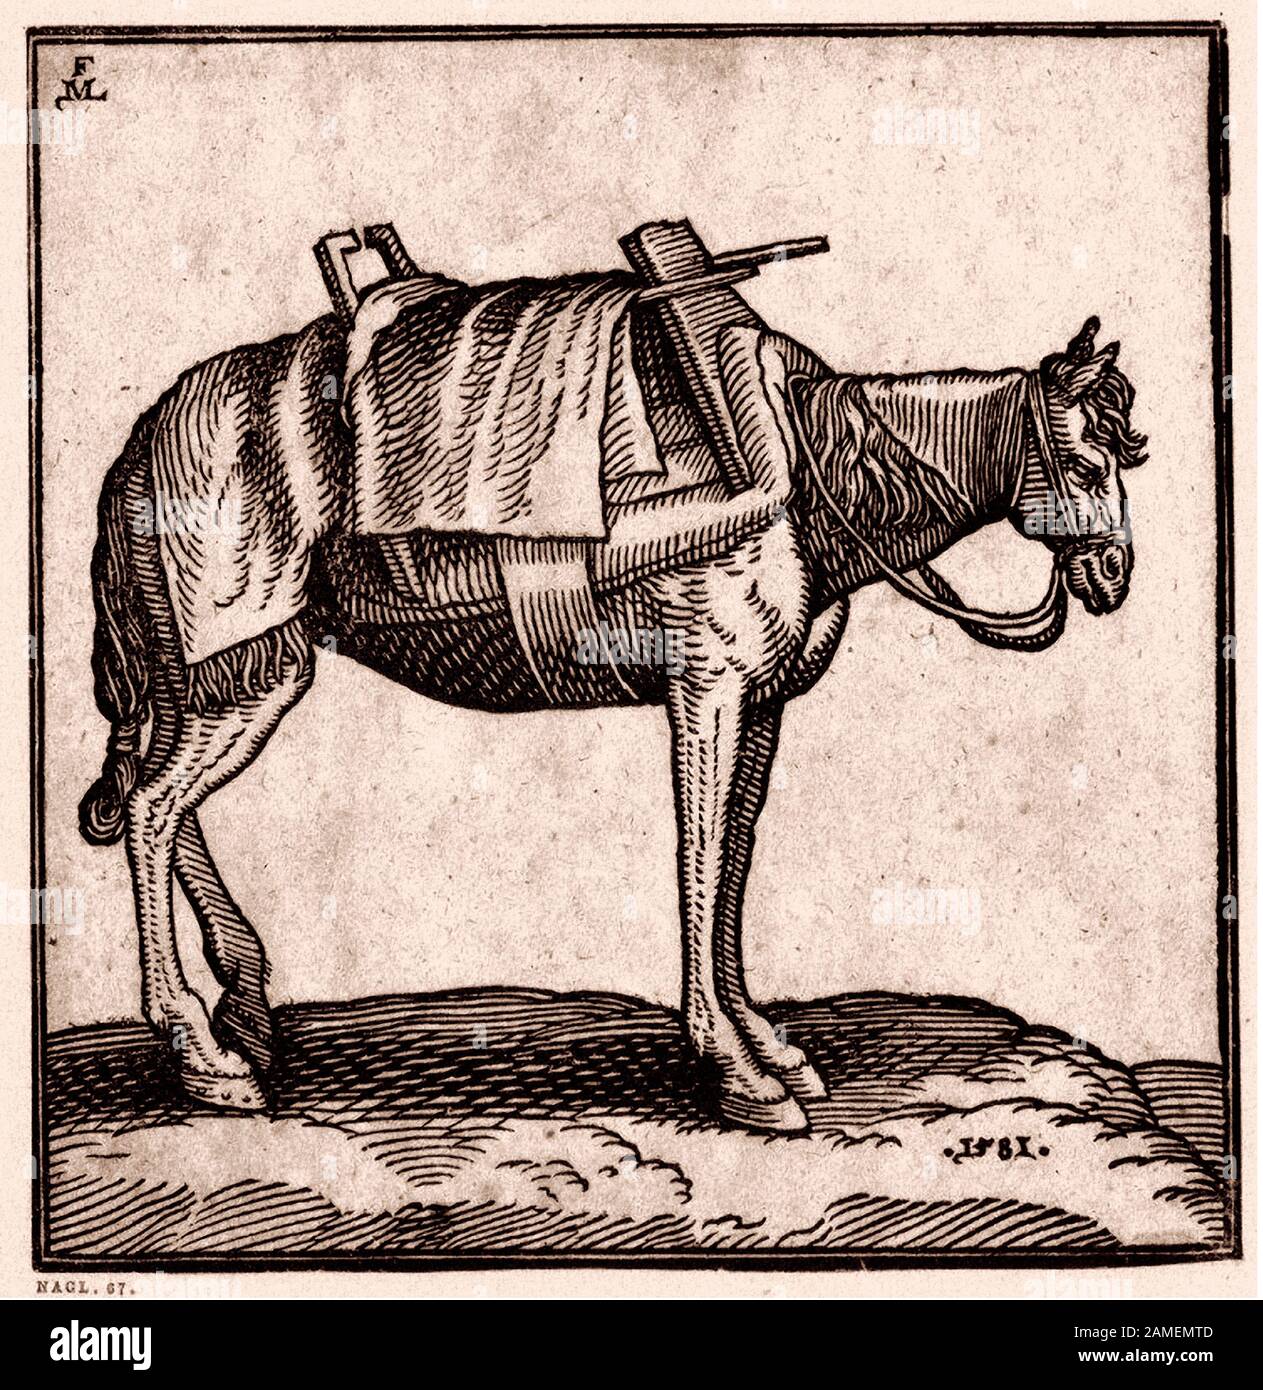 La historia del Imperio Otomano. Un caballo de equipaje Tartar. Por Melchior Lorck. siglo 16 Foto de stock